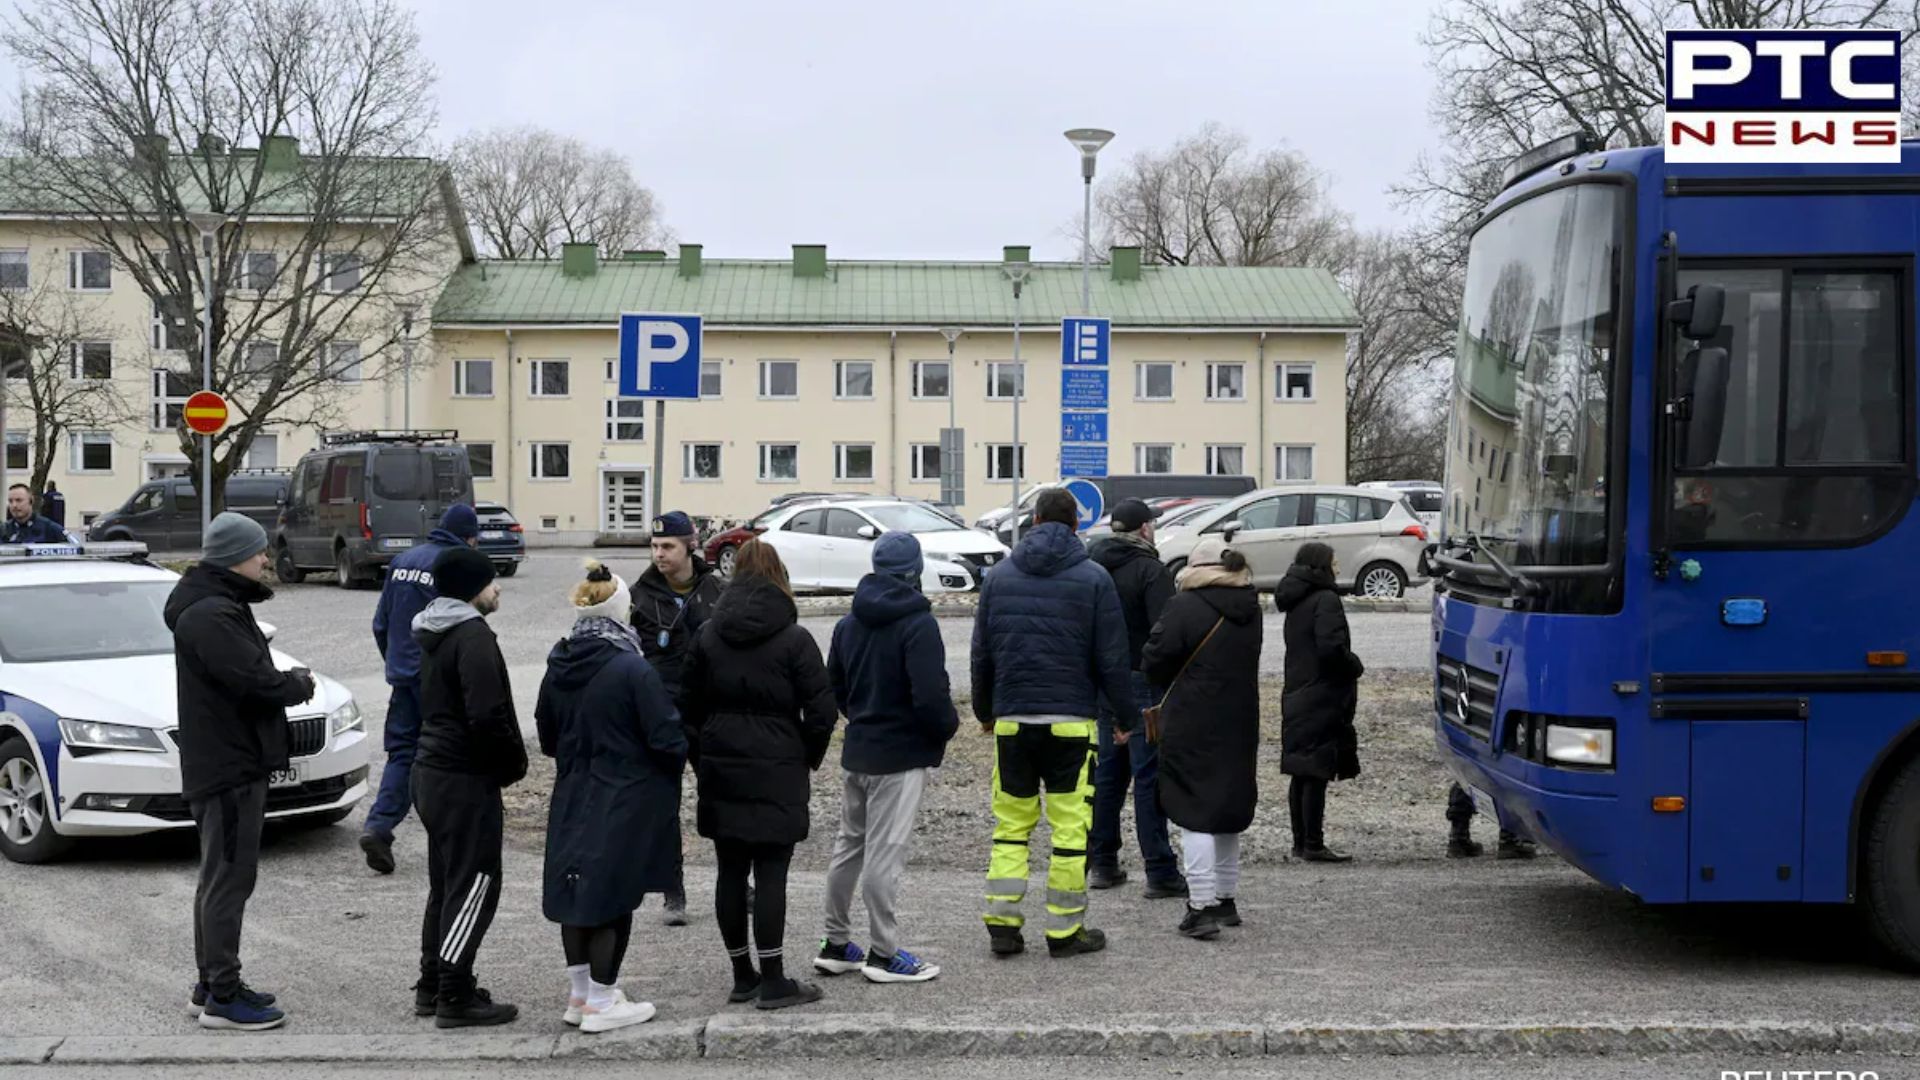 Finland school shooting: 12-year-old fires gun inside Finnish School, injuring three classmates